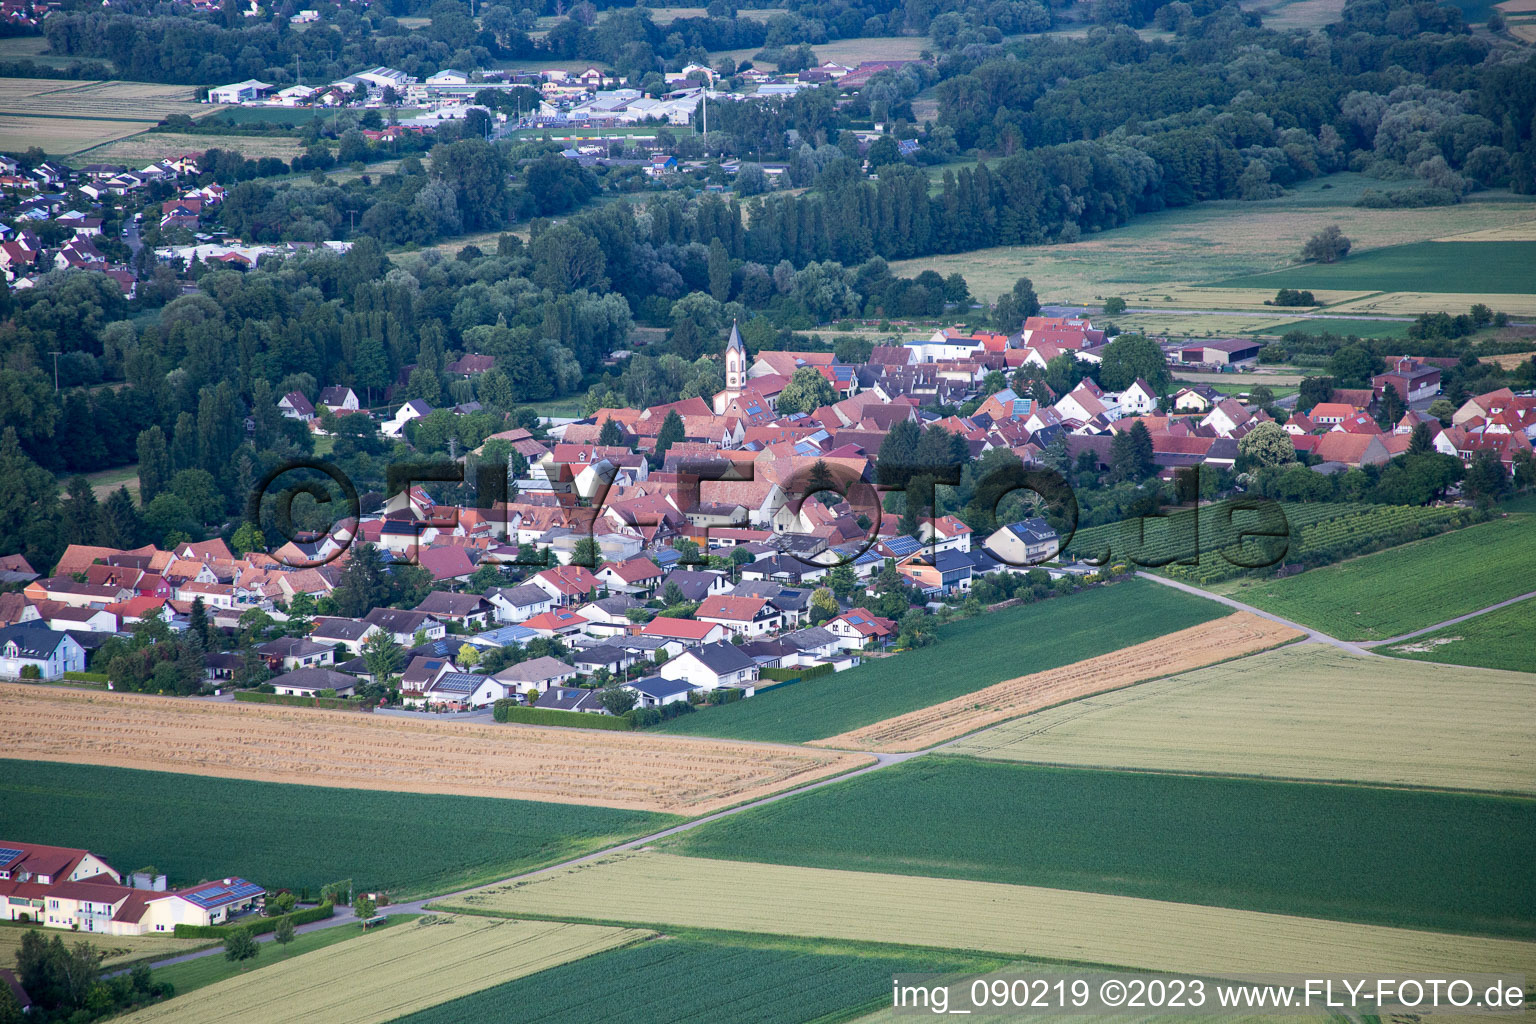 District Mühlhofen in Billigheim-Ingenheim in the state Rhineland-Palatinate, Germany from the plane